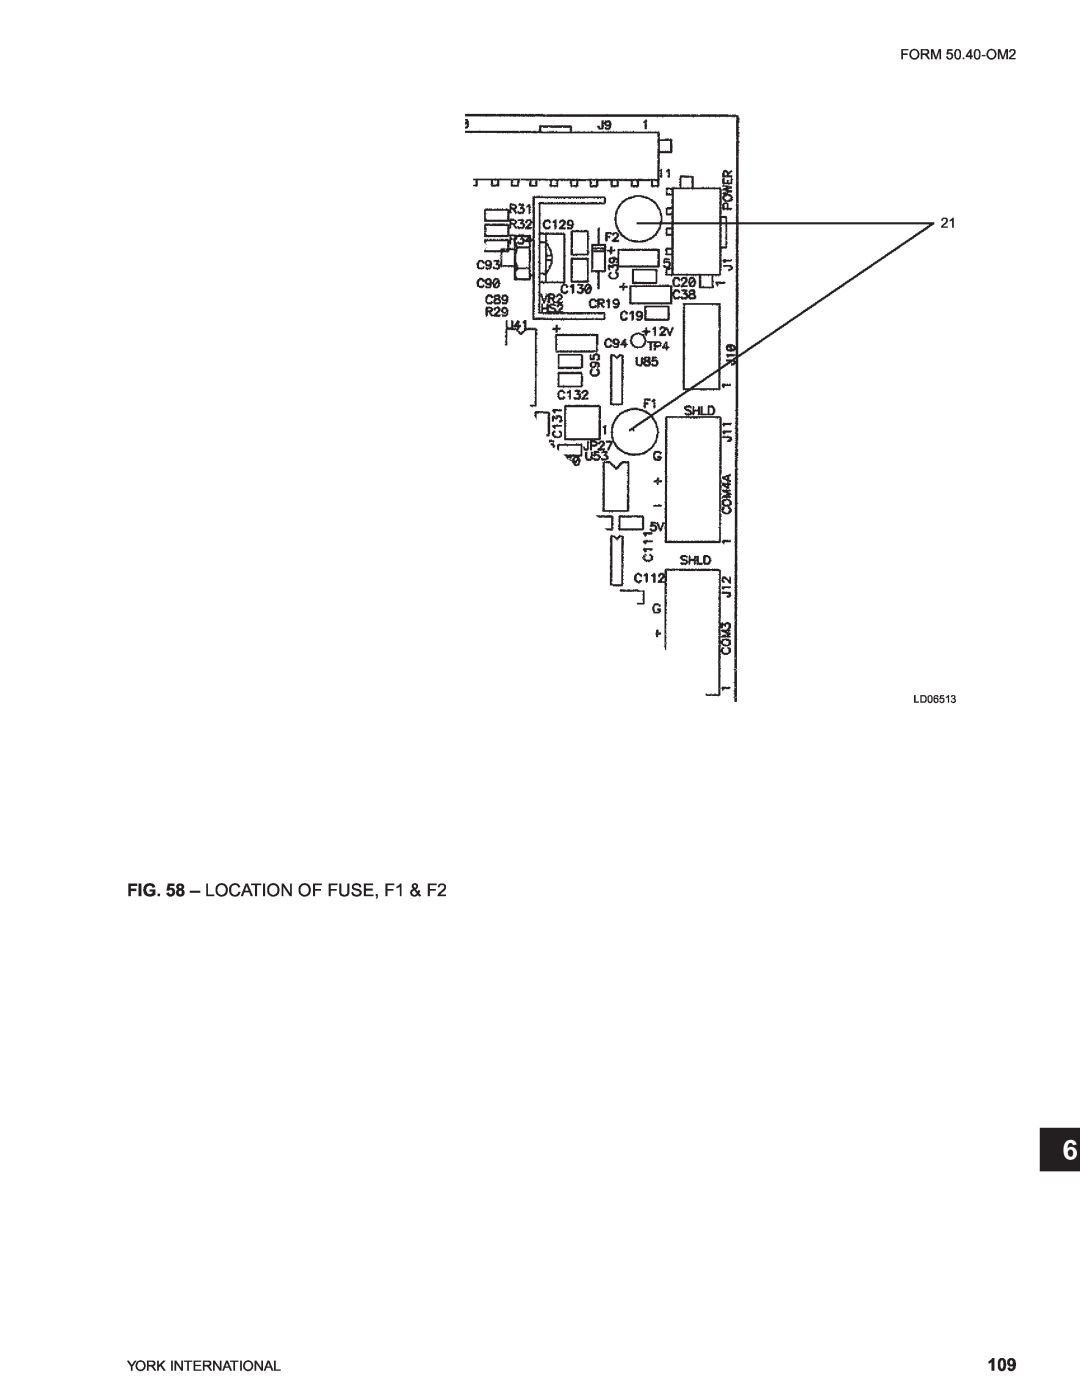 York 00497VIP manual LOCATION OF FUSE, F1 & F2, FORM 50.40-OM2 21, York International, LD06513 